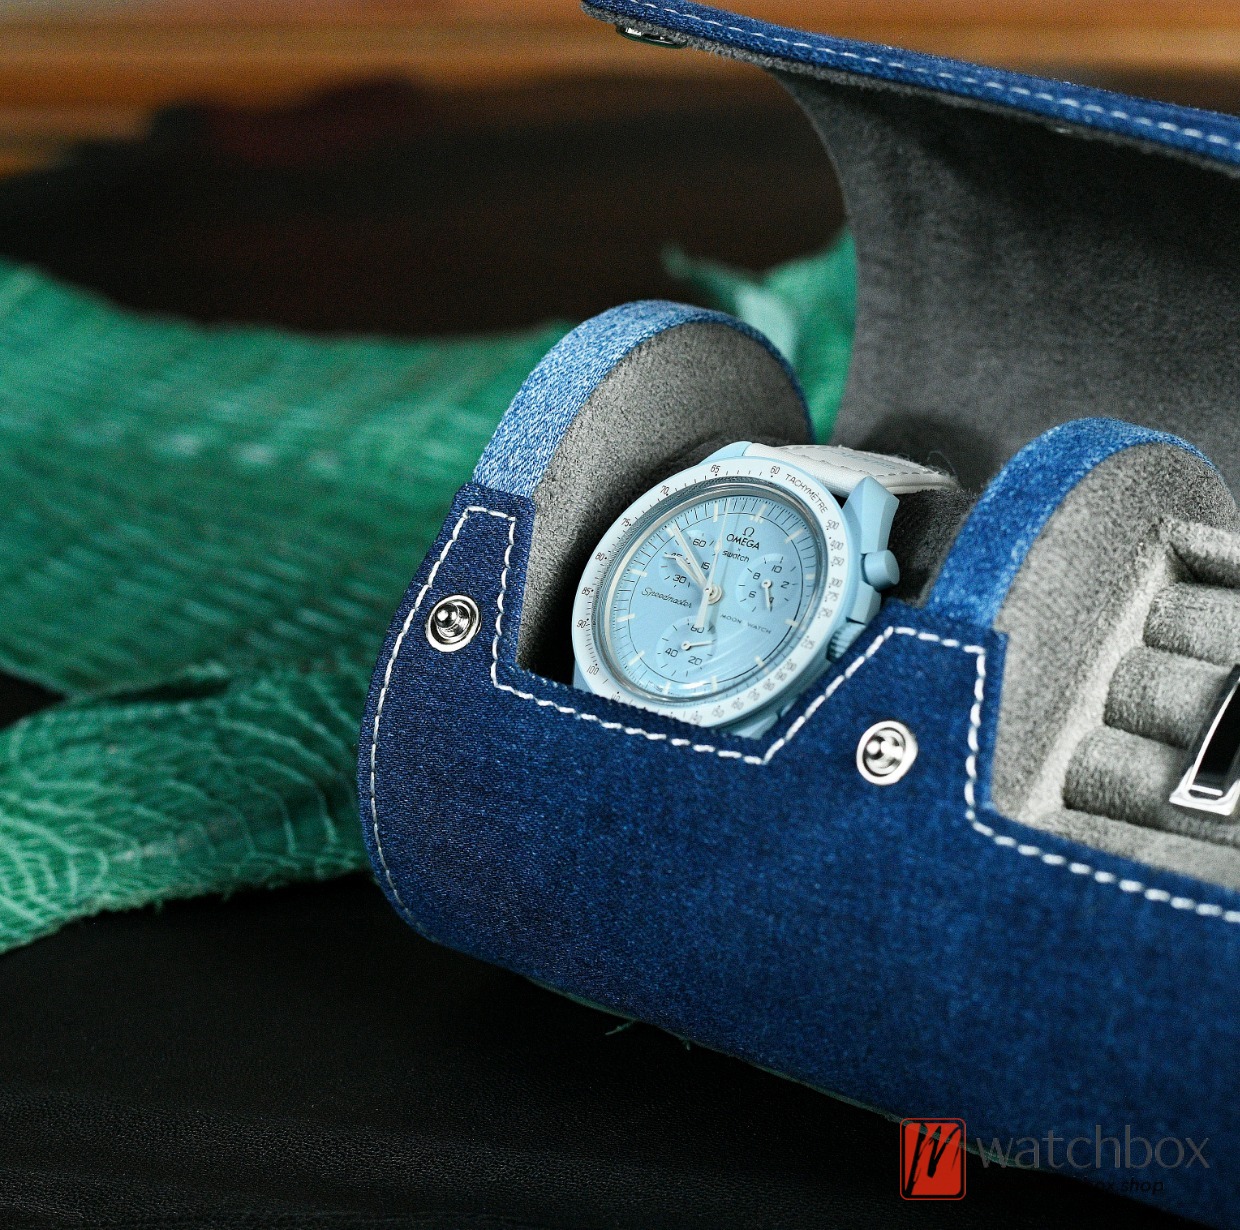 Microfiber Leather Watch Jewelry Ring Cufflinks Case Storage Box Travel Portable Box Gift Box